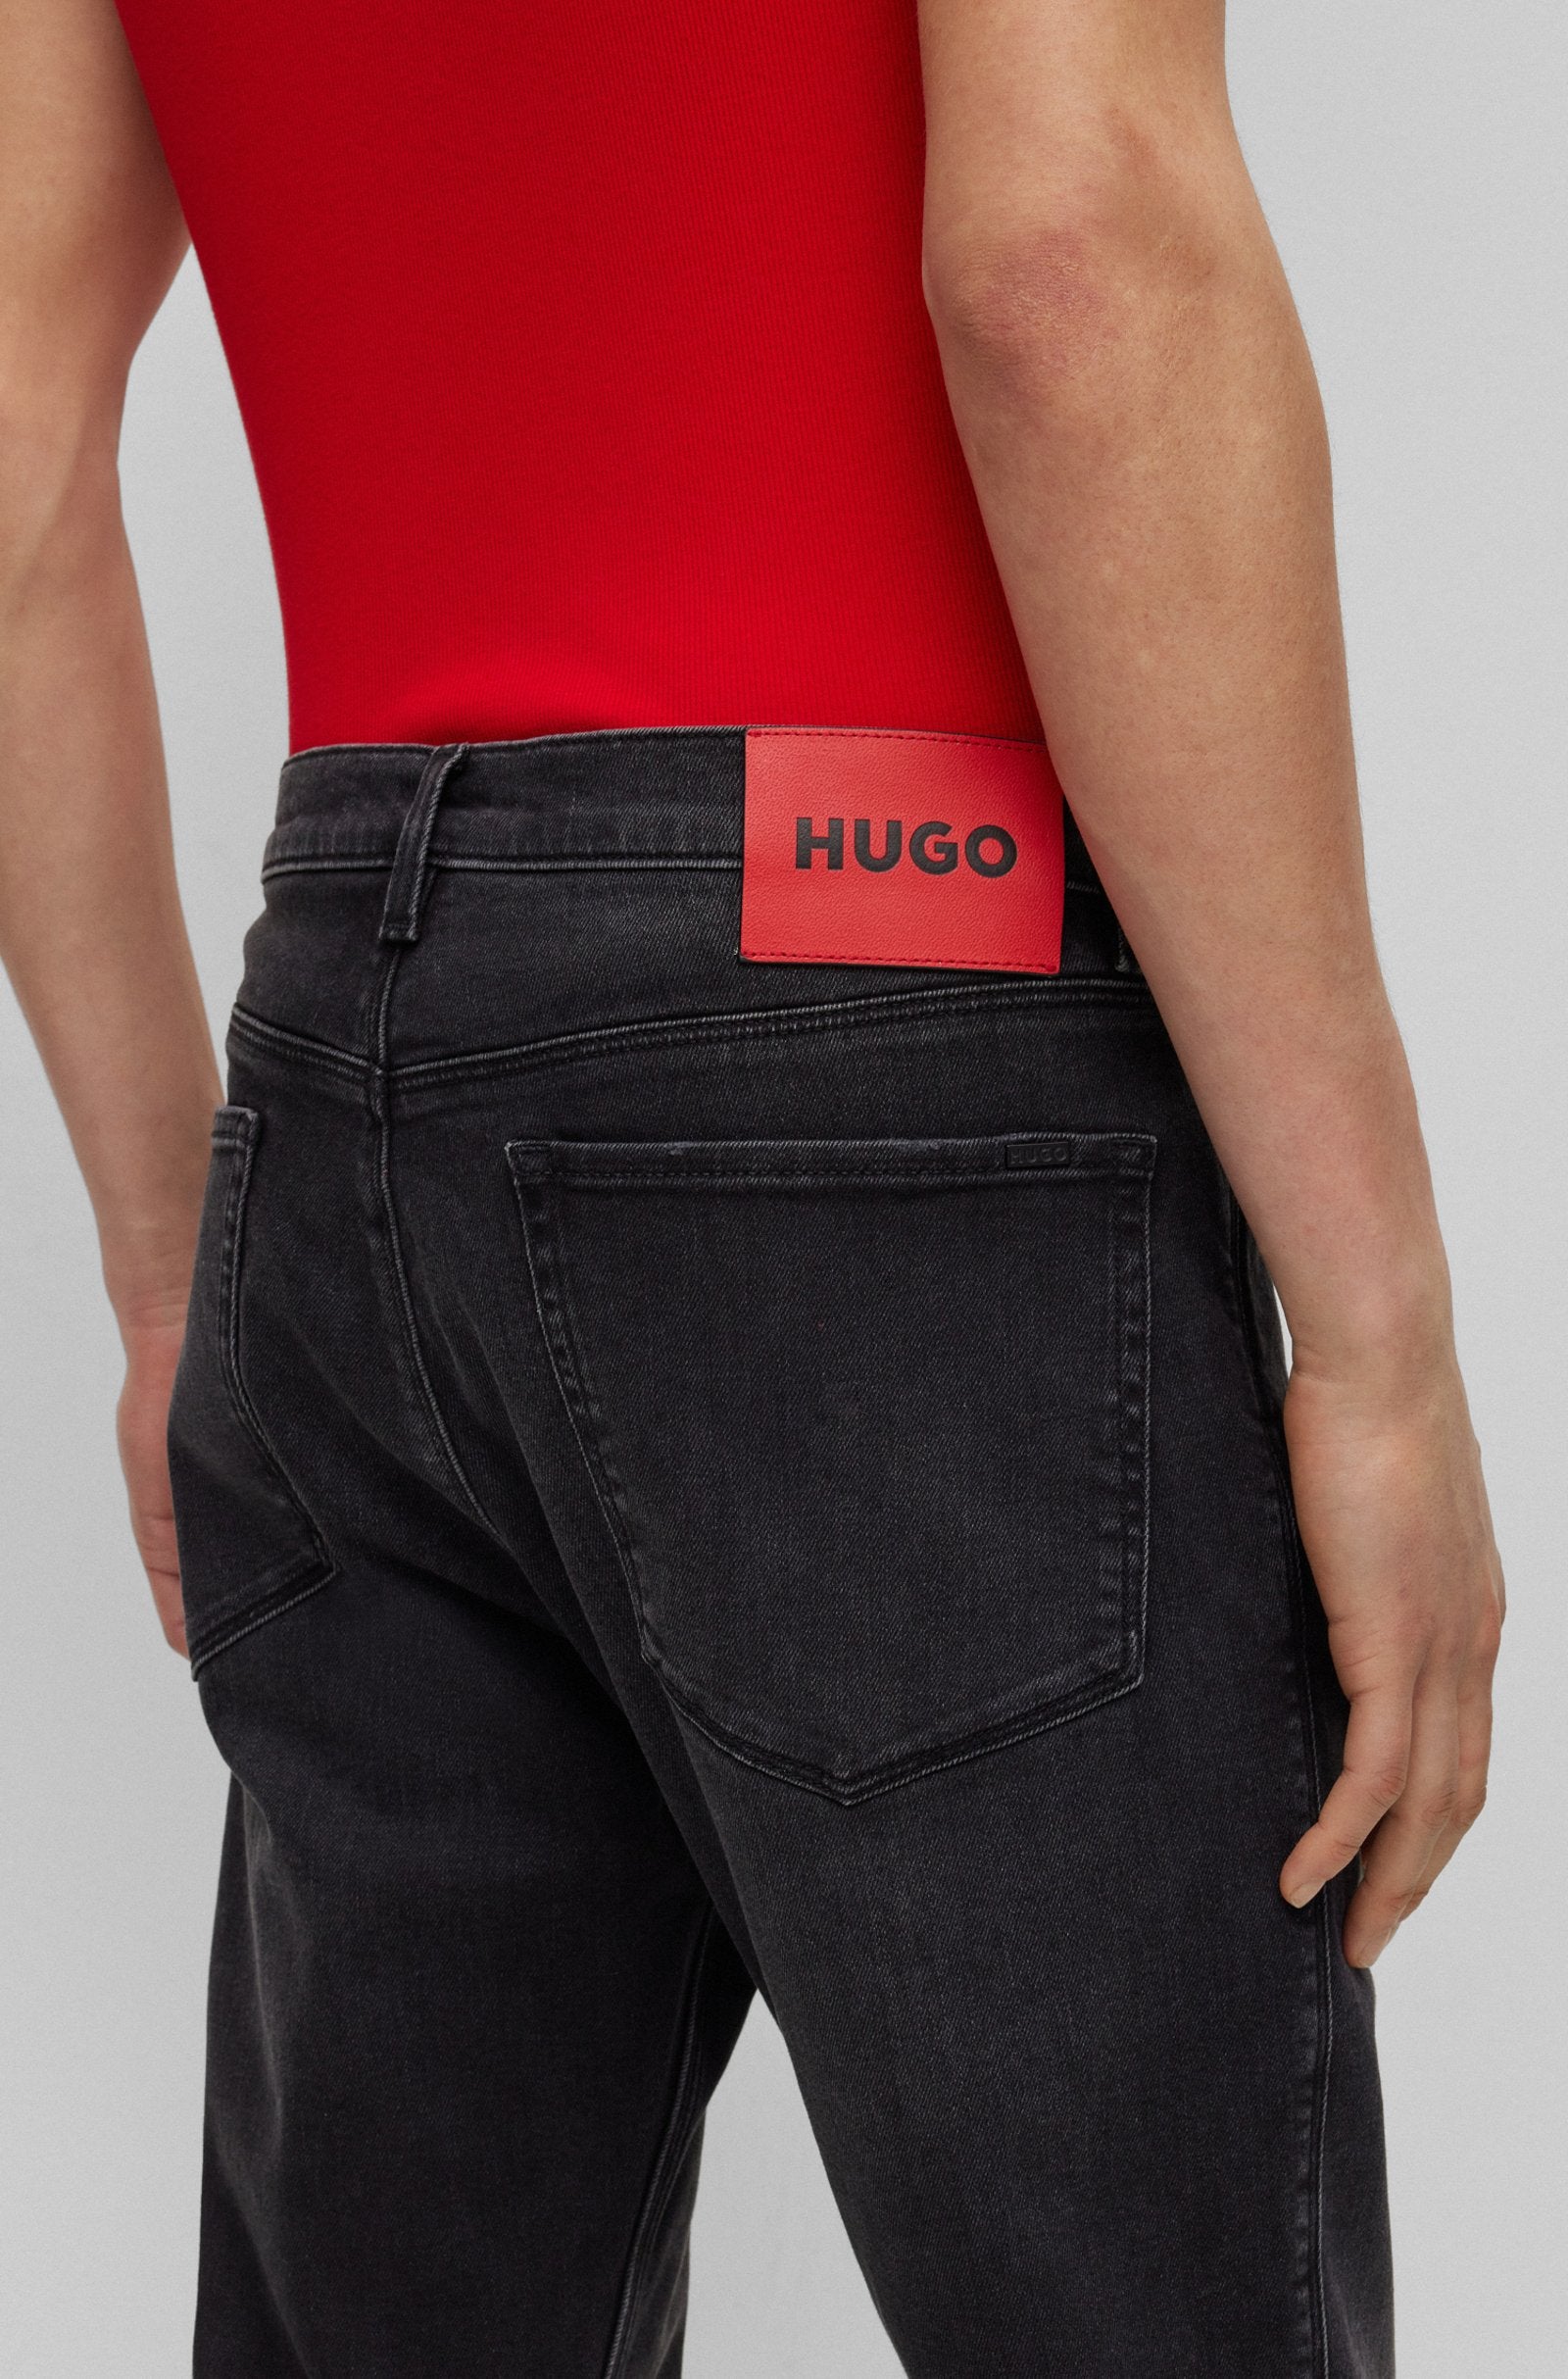 HUGO HUGO 708 Jeans 10243500 025 Dark Grey